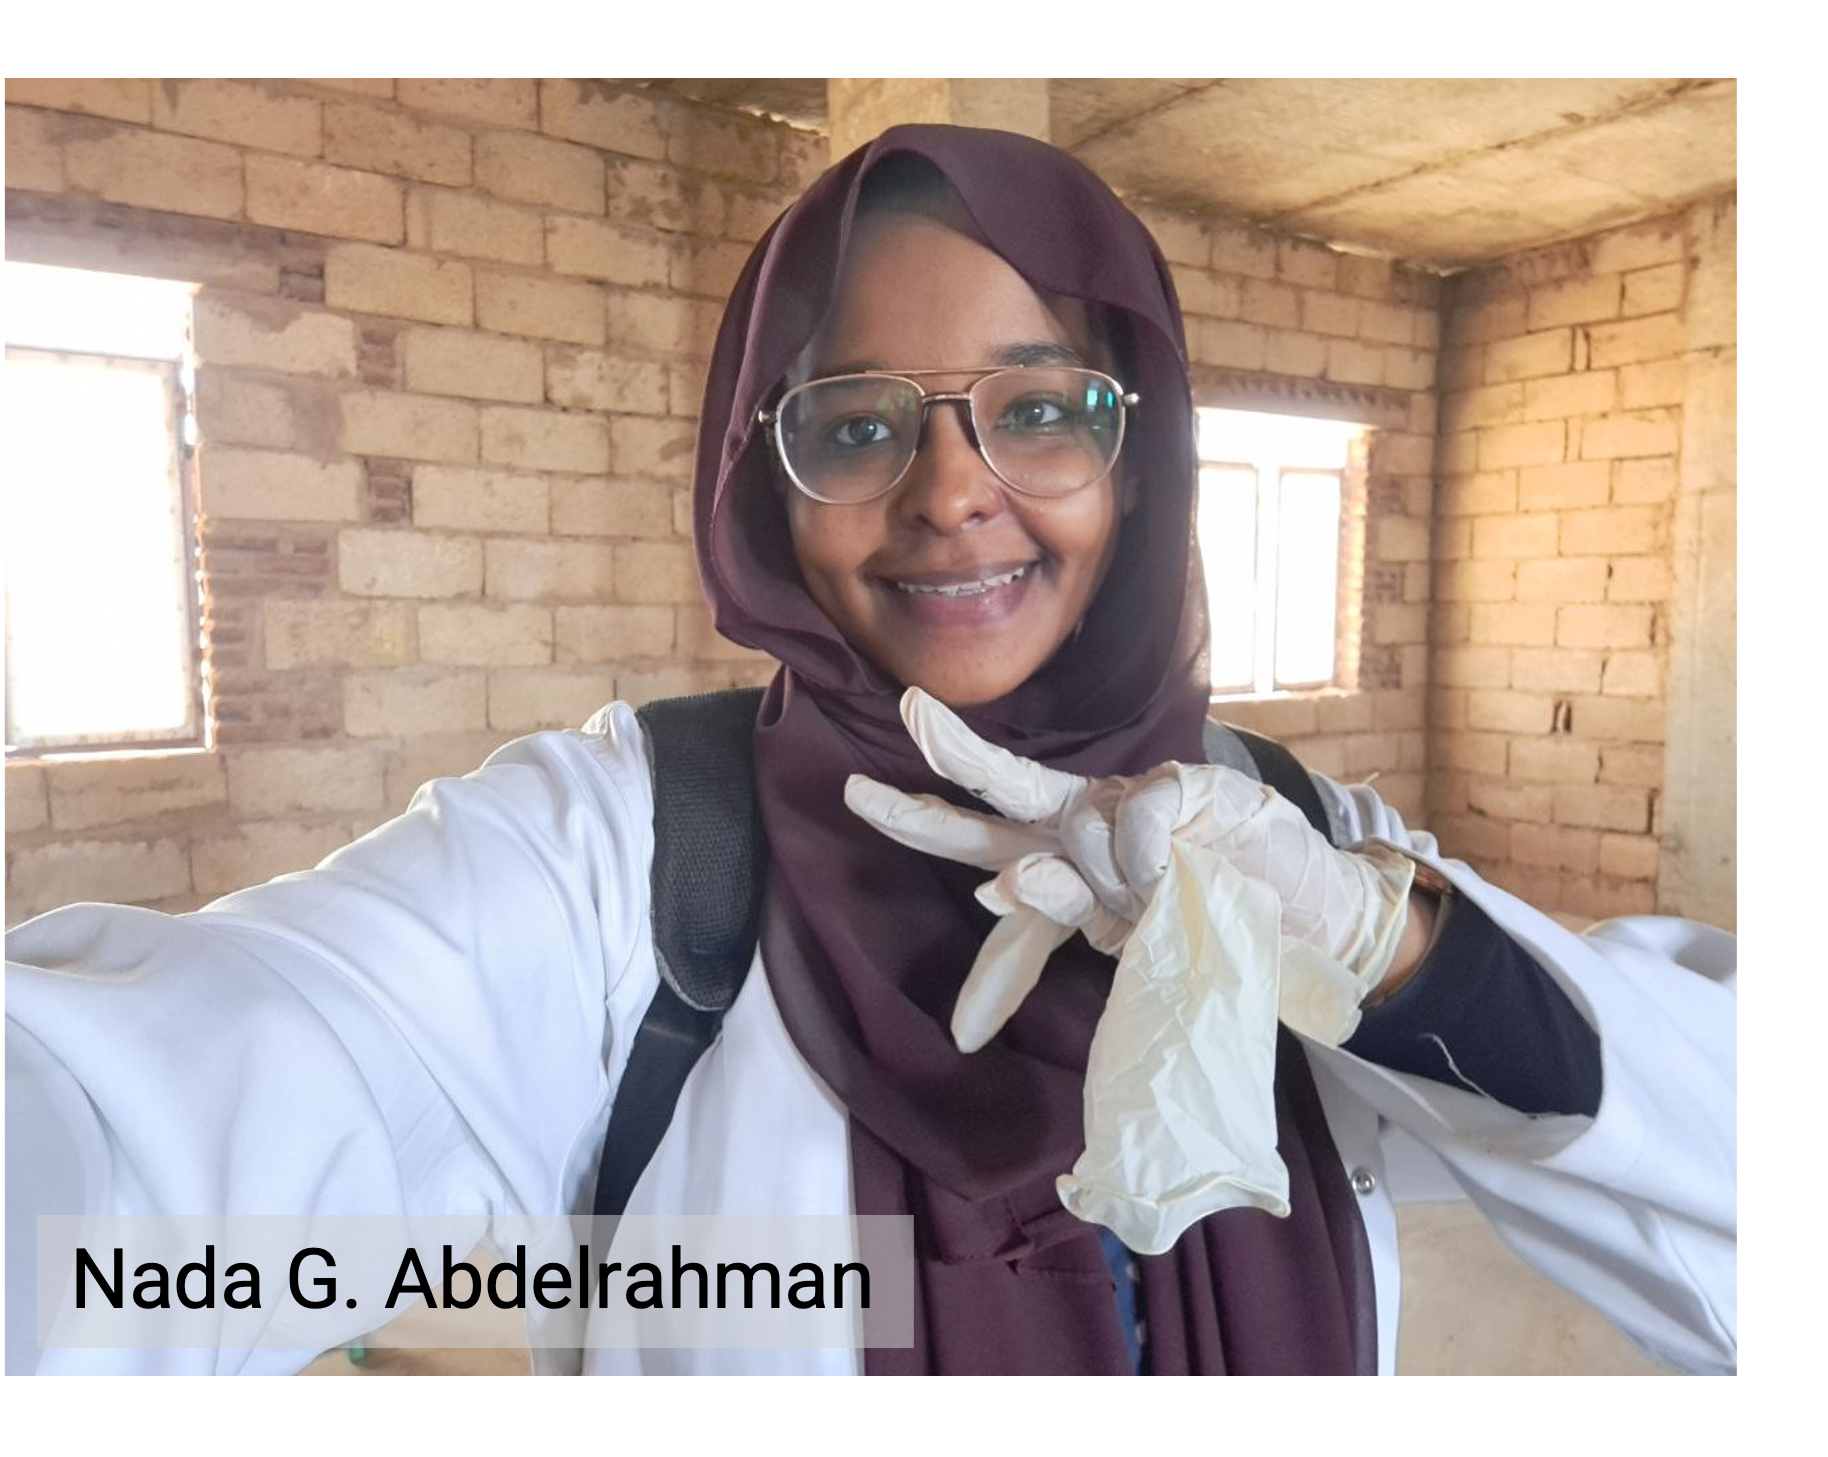 Nada G. Abdelrahman, Final year student at faculty of Medical Laboratory Sciences, University of Khartoum.